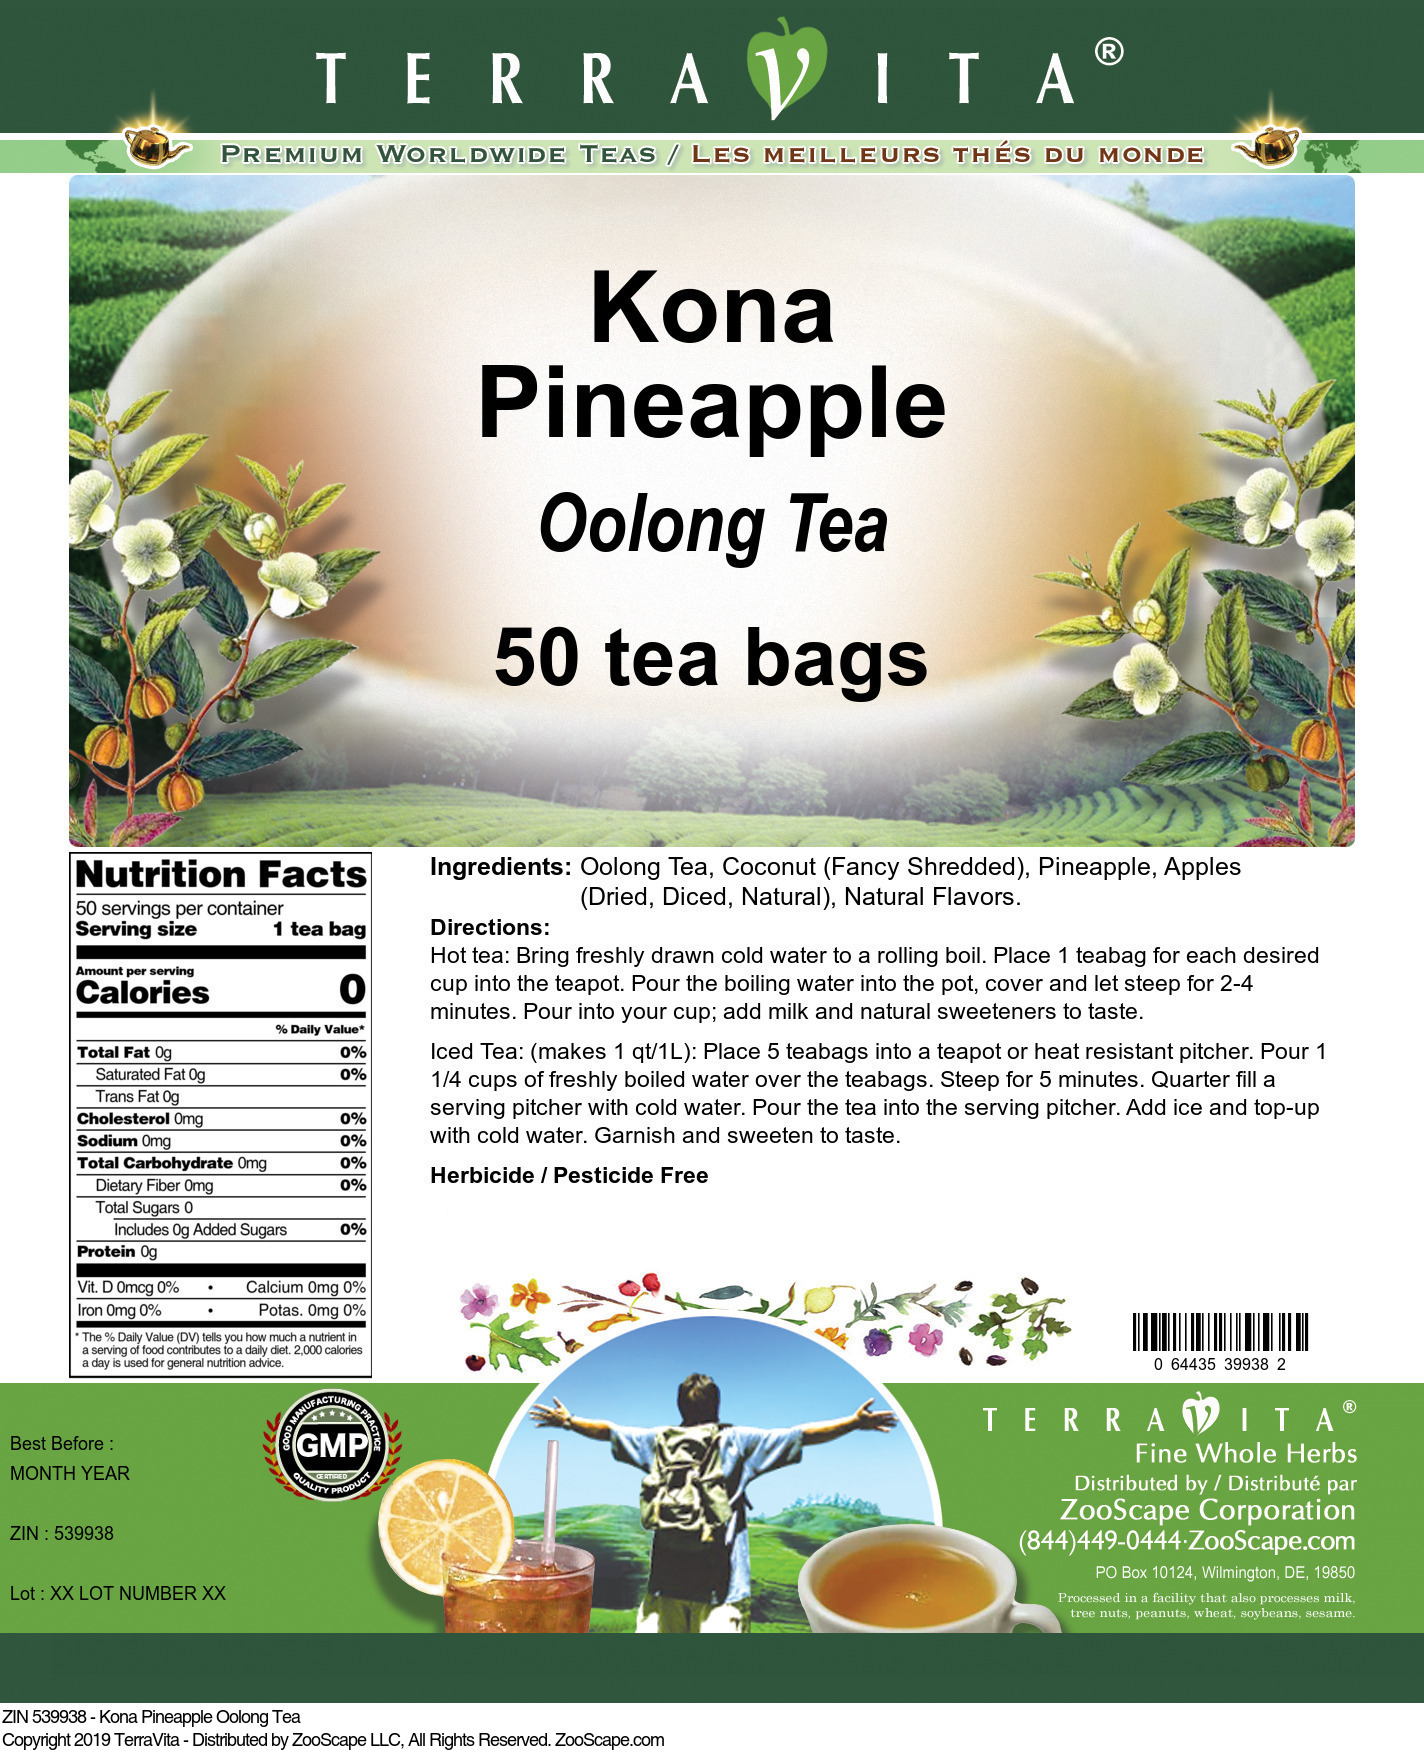 Kona Pineapple Oolong Tea - Label